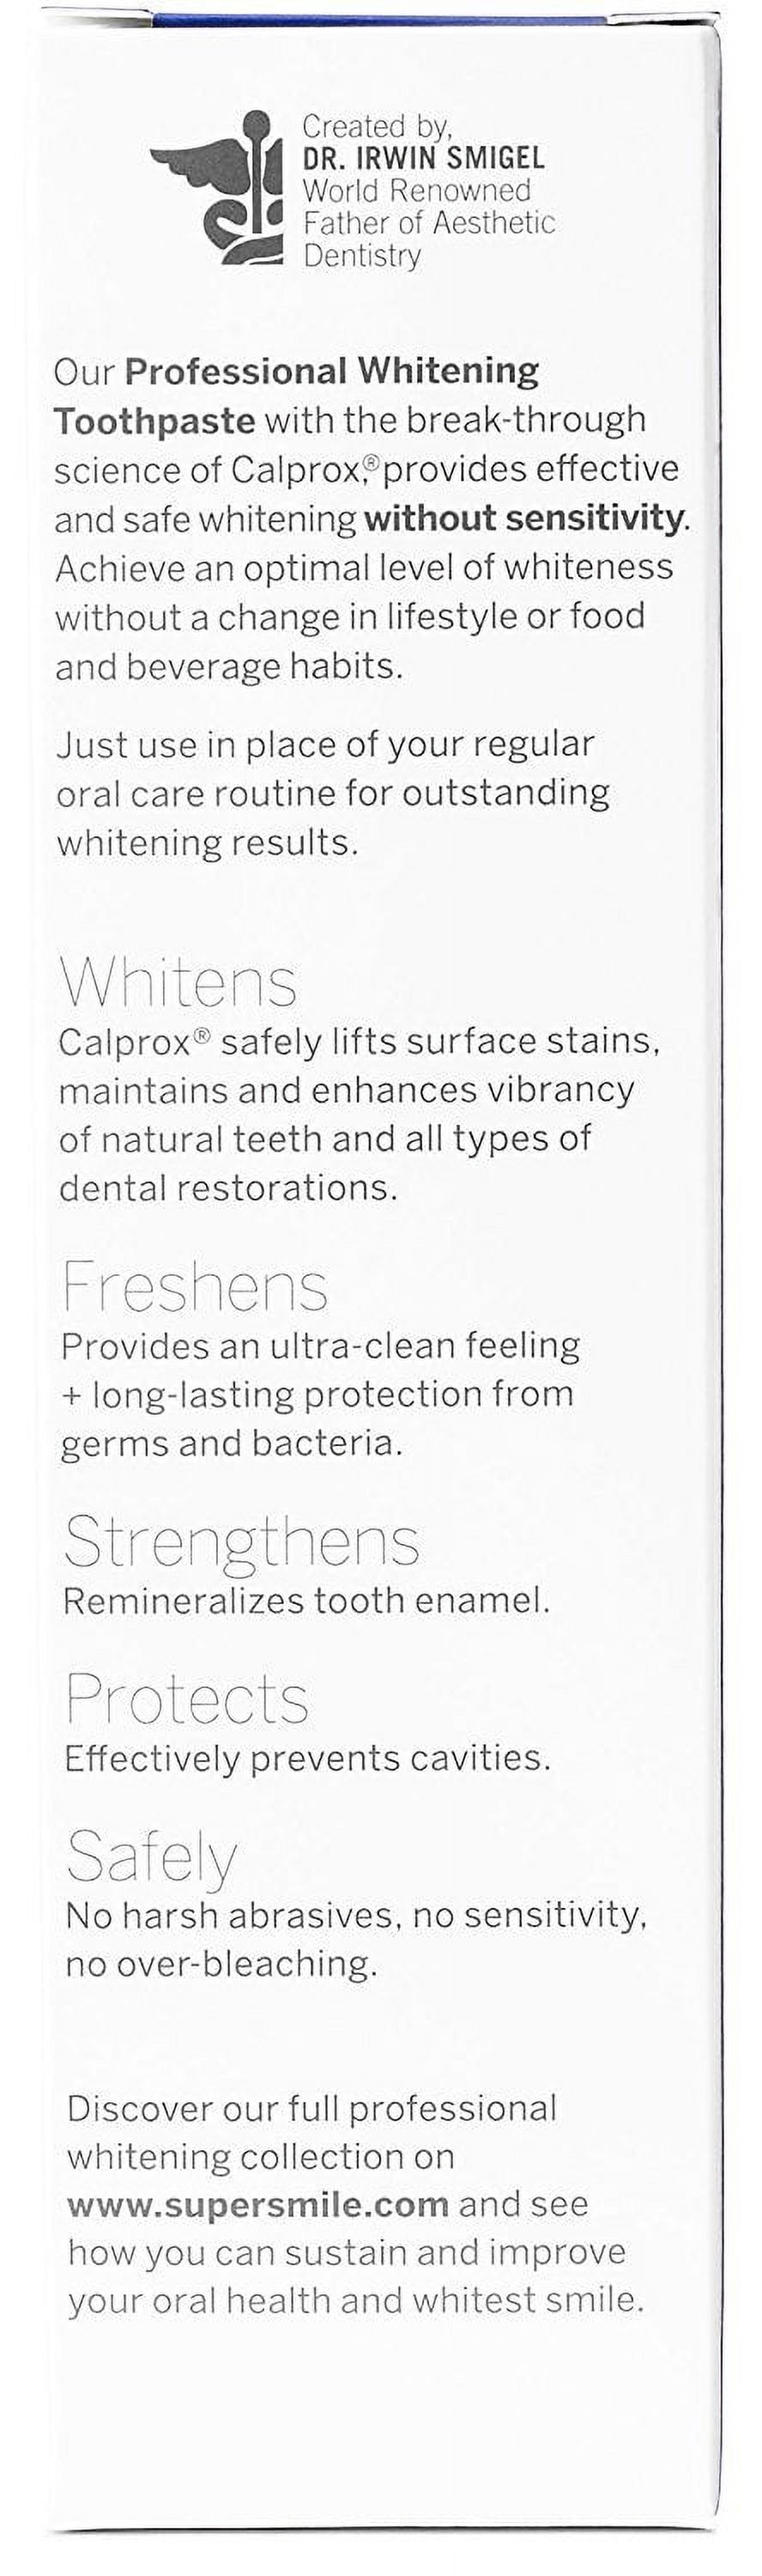 Supersmile:Professional Whitening Cinnamon Burst Toothpaste 4.2oz - image 3 of 11